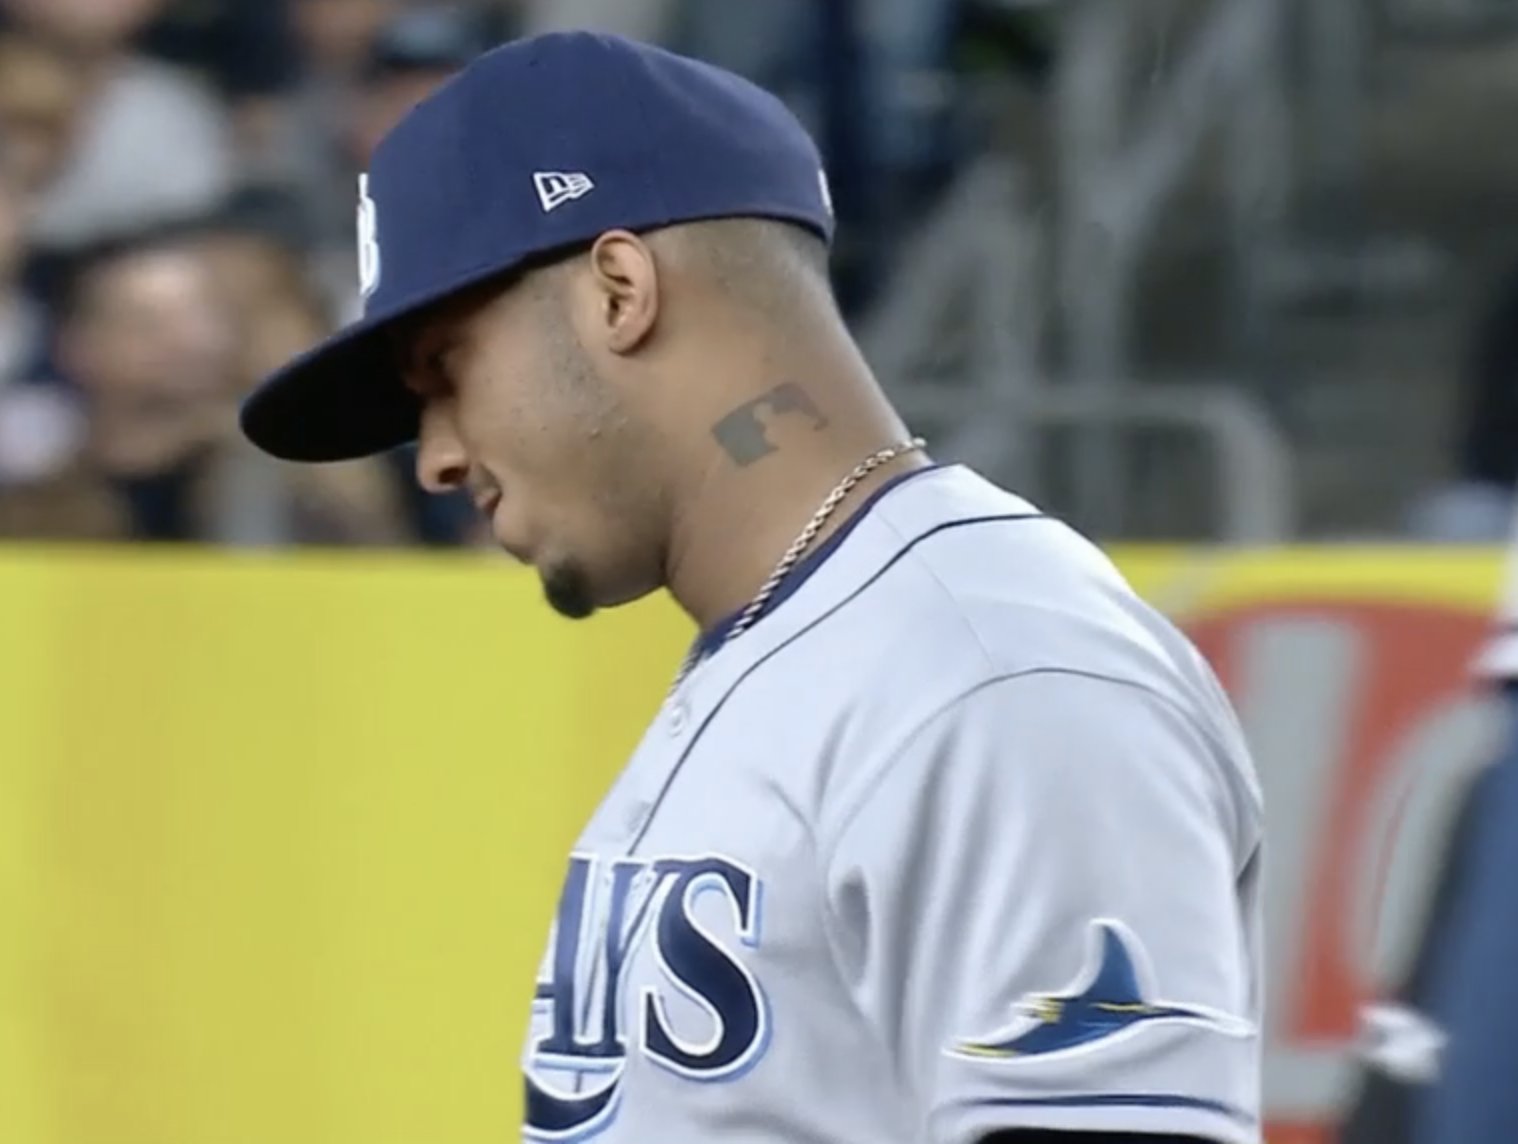 Talkin' Baseball on X: Just noticed the MLB logo tattoo on Wander Franco's  neck. That's dope  / X